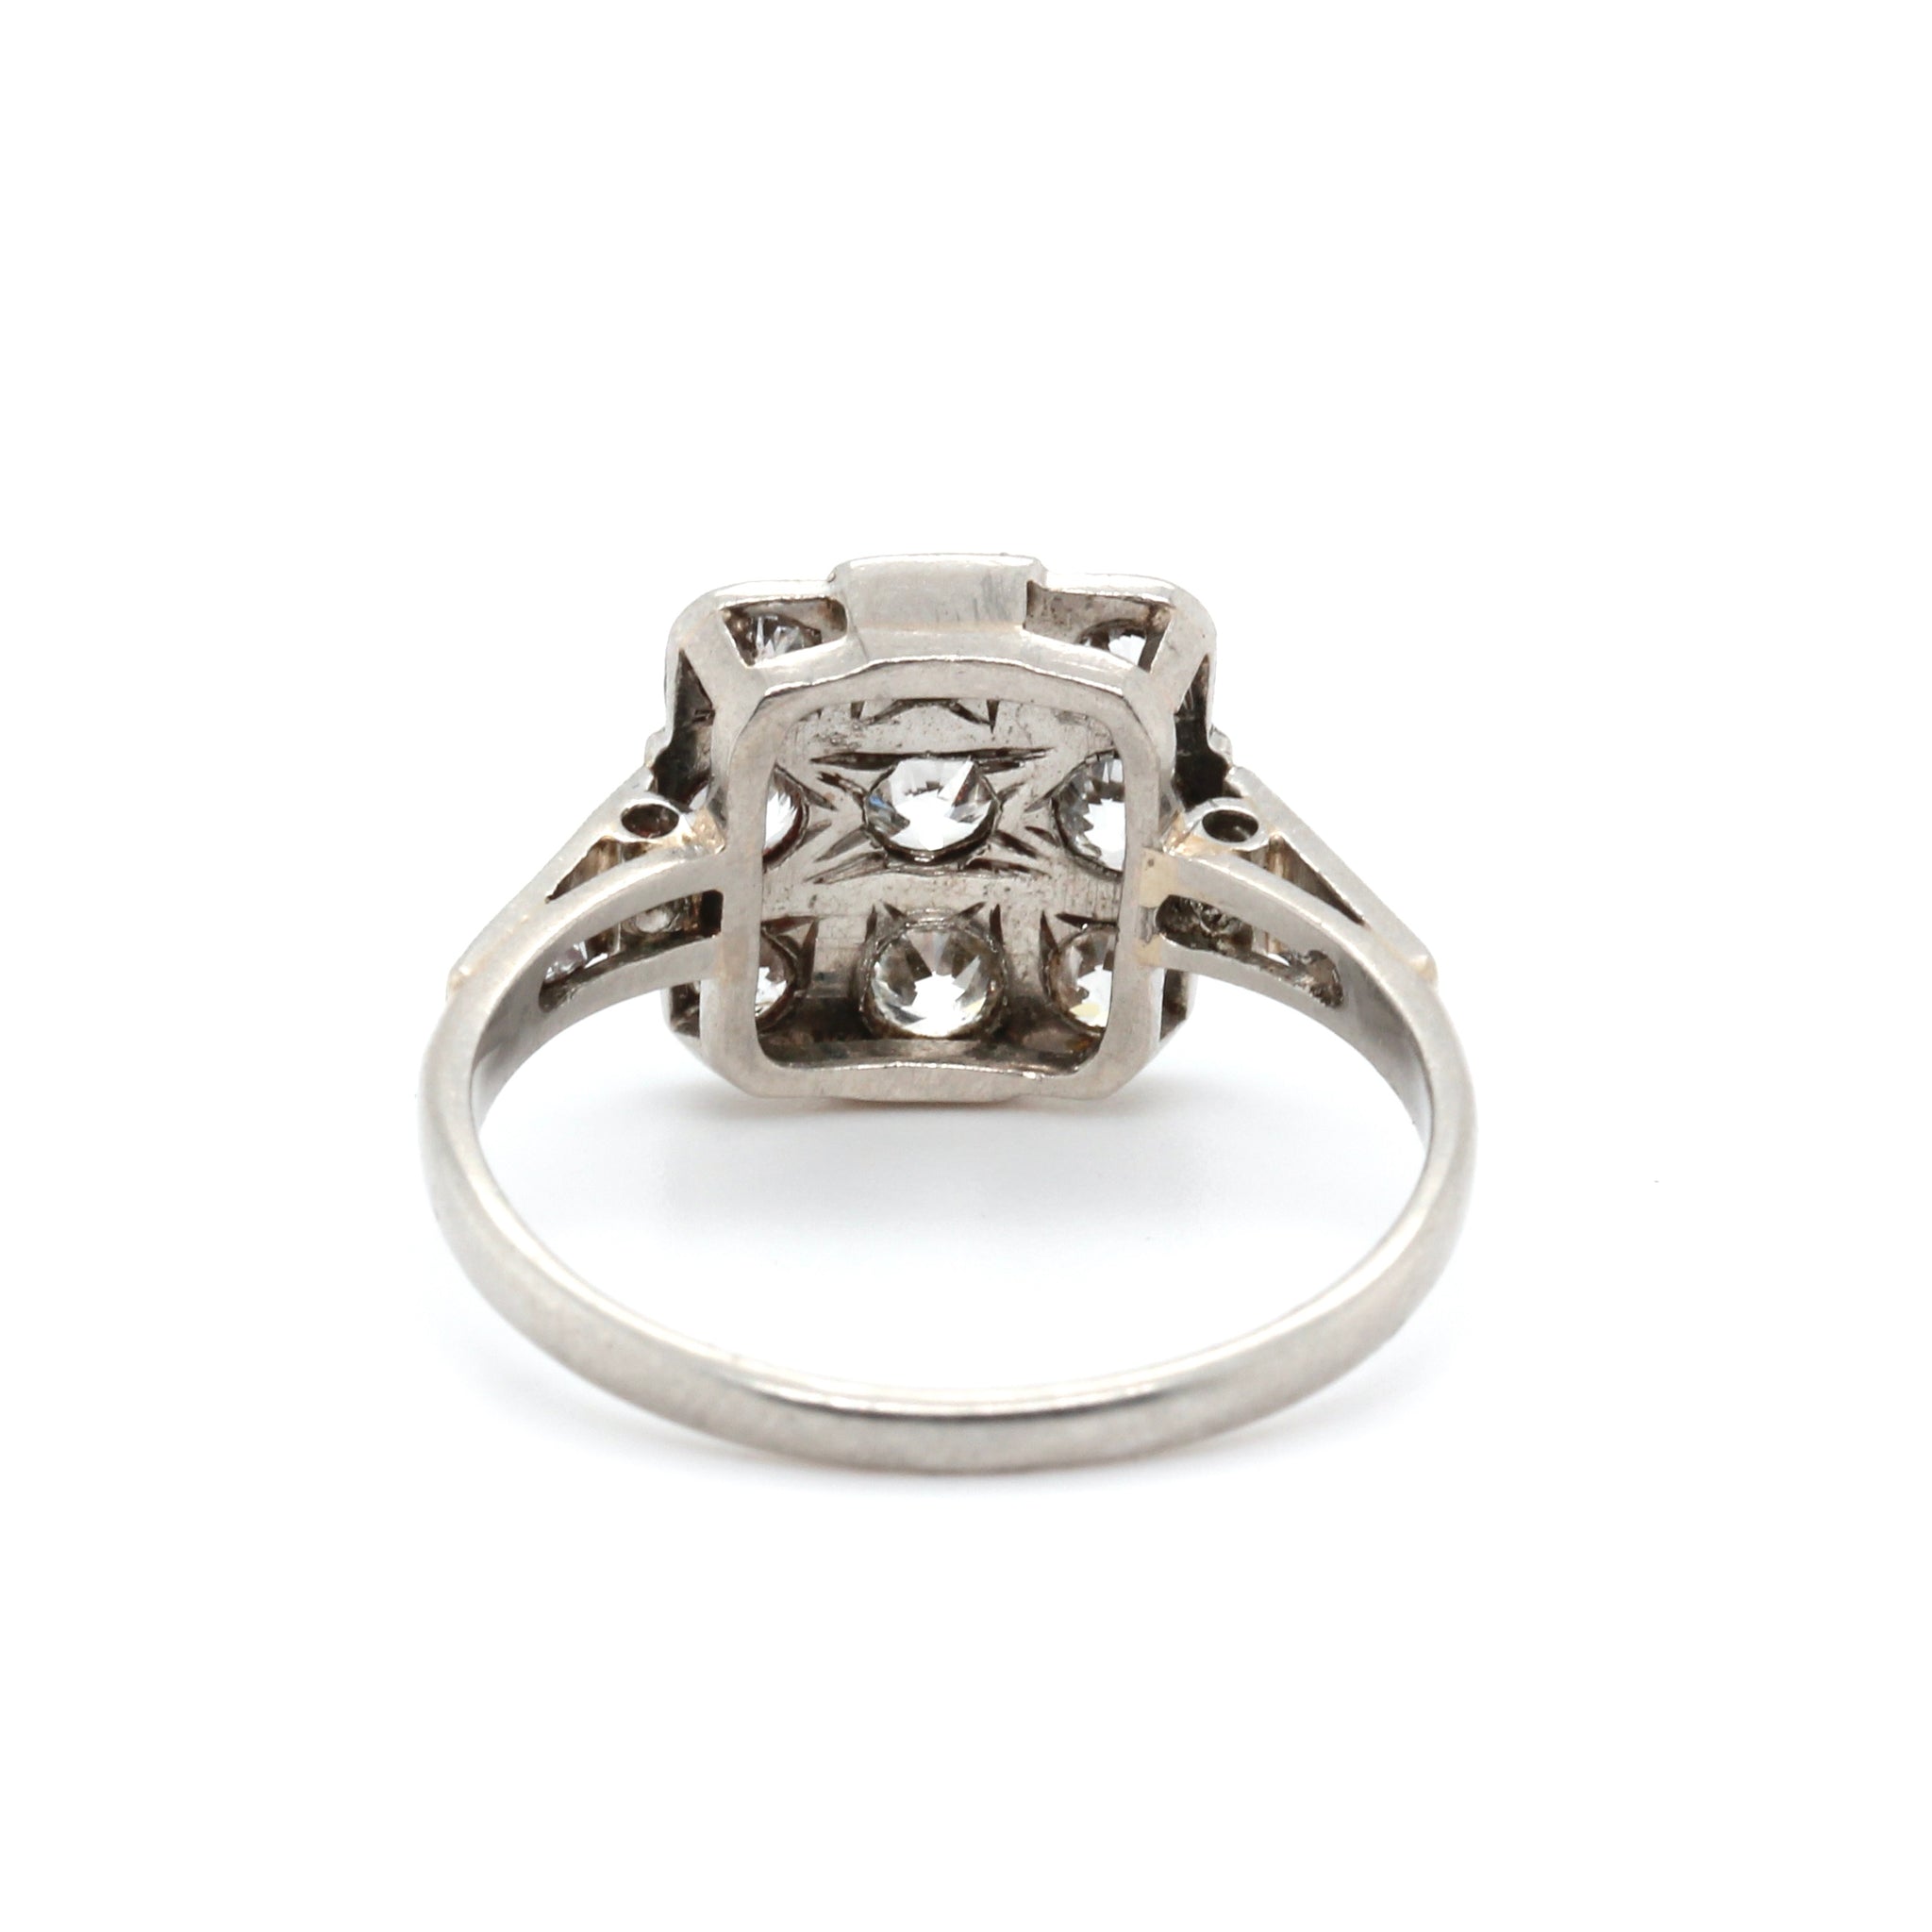 1920s Square Diamond Ring